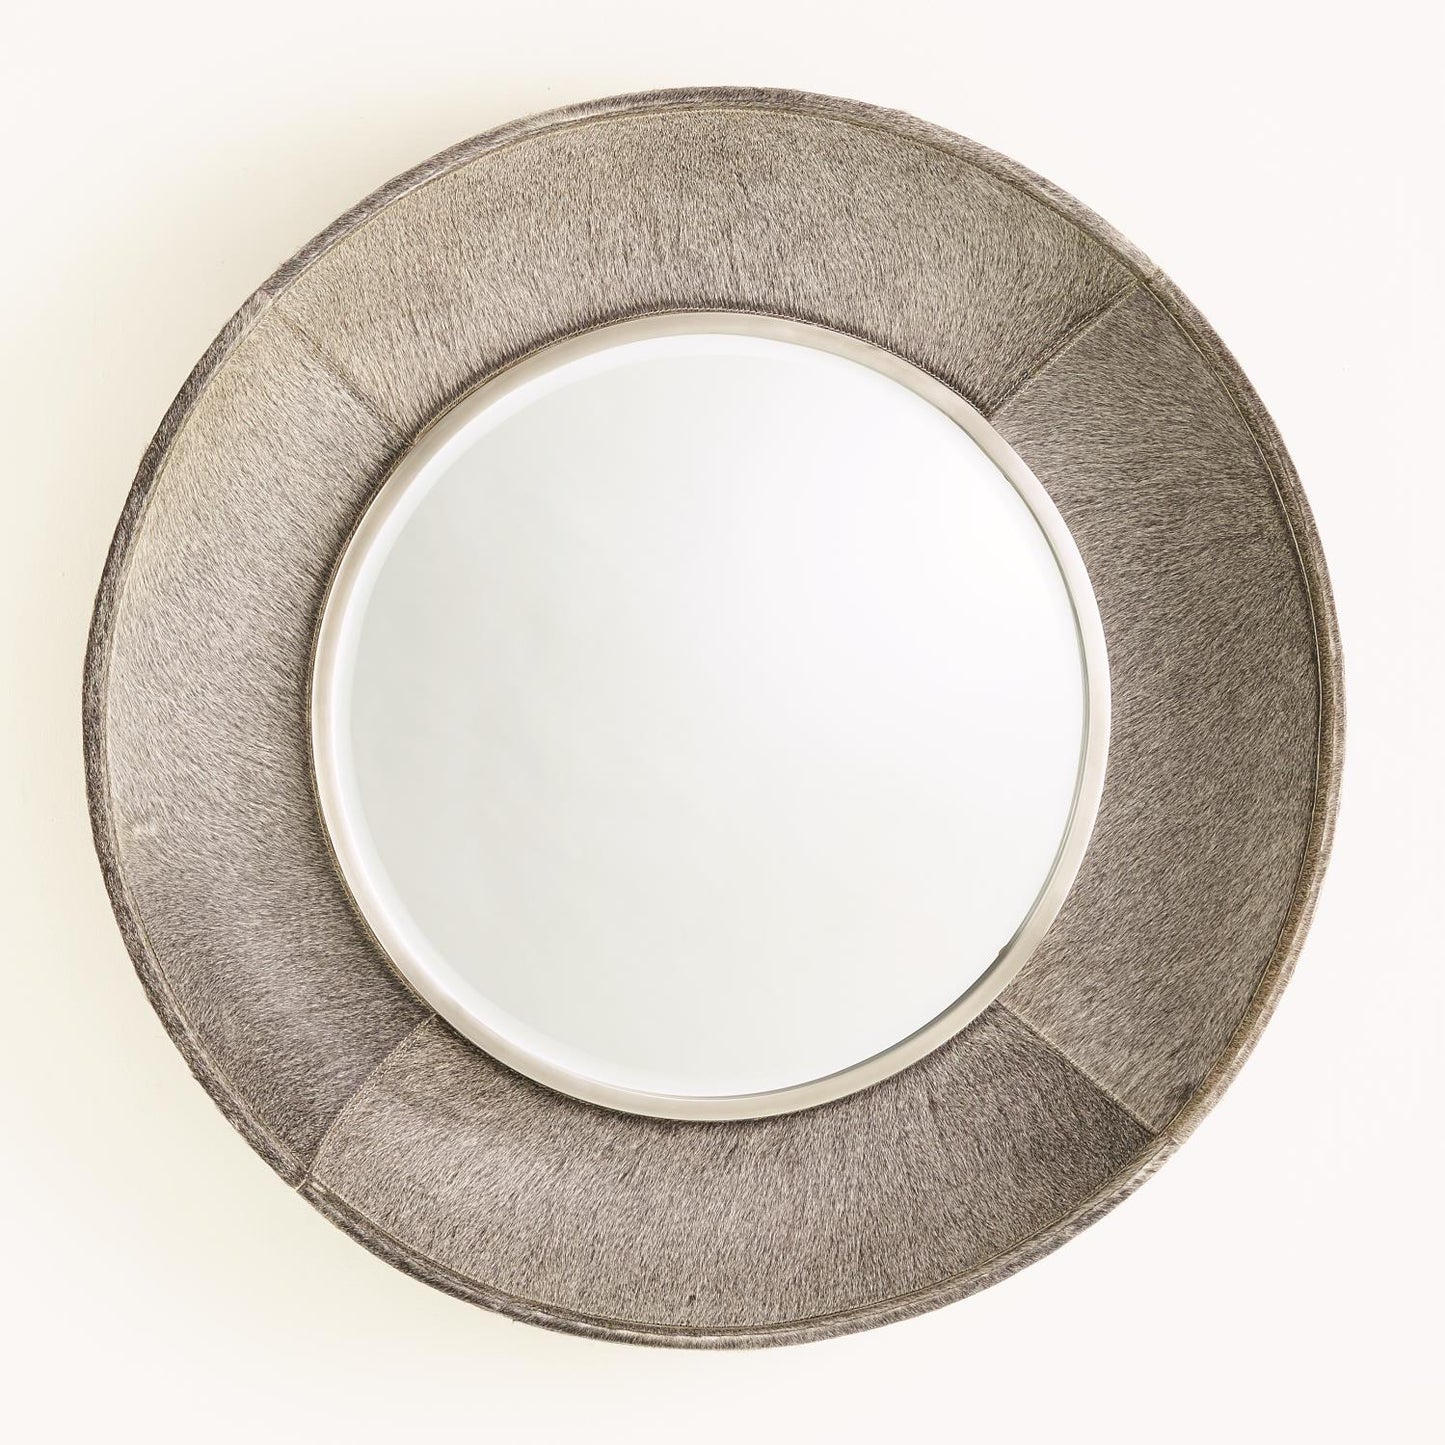 Metro Round Mirror - Grey Hair-On-Hide - Grats Decor Interior Design & Build Inc.